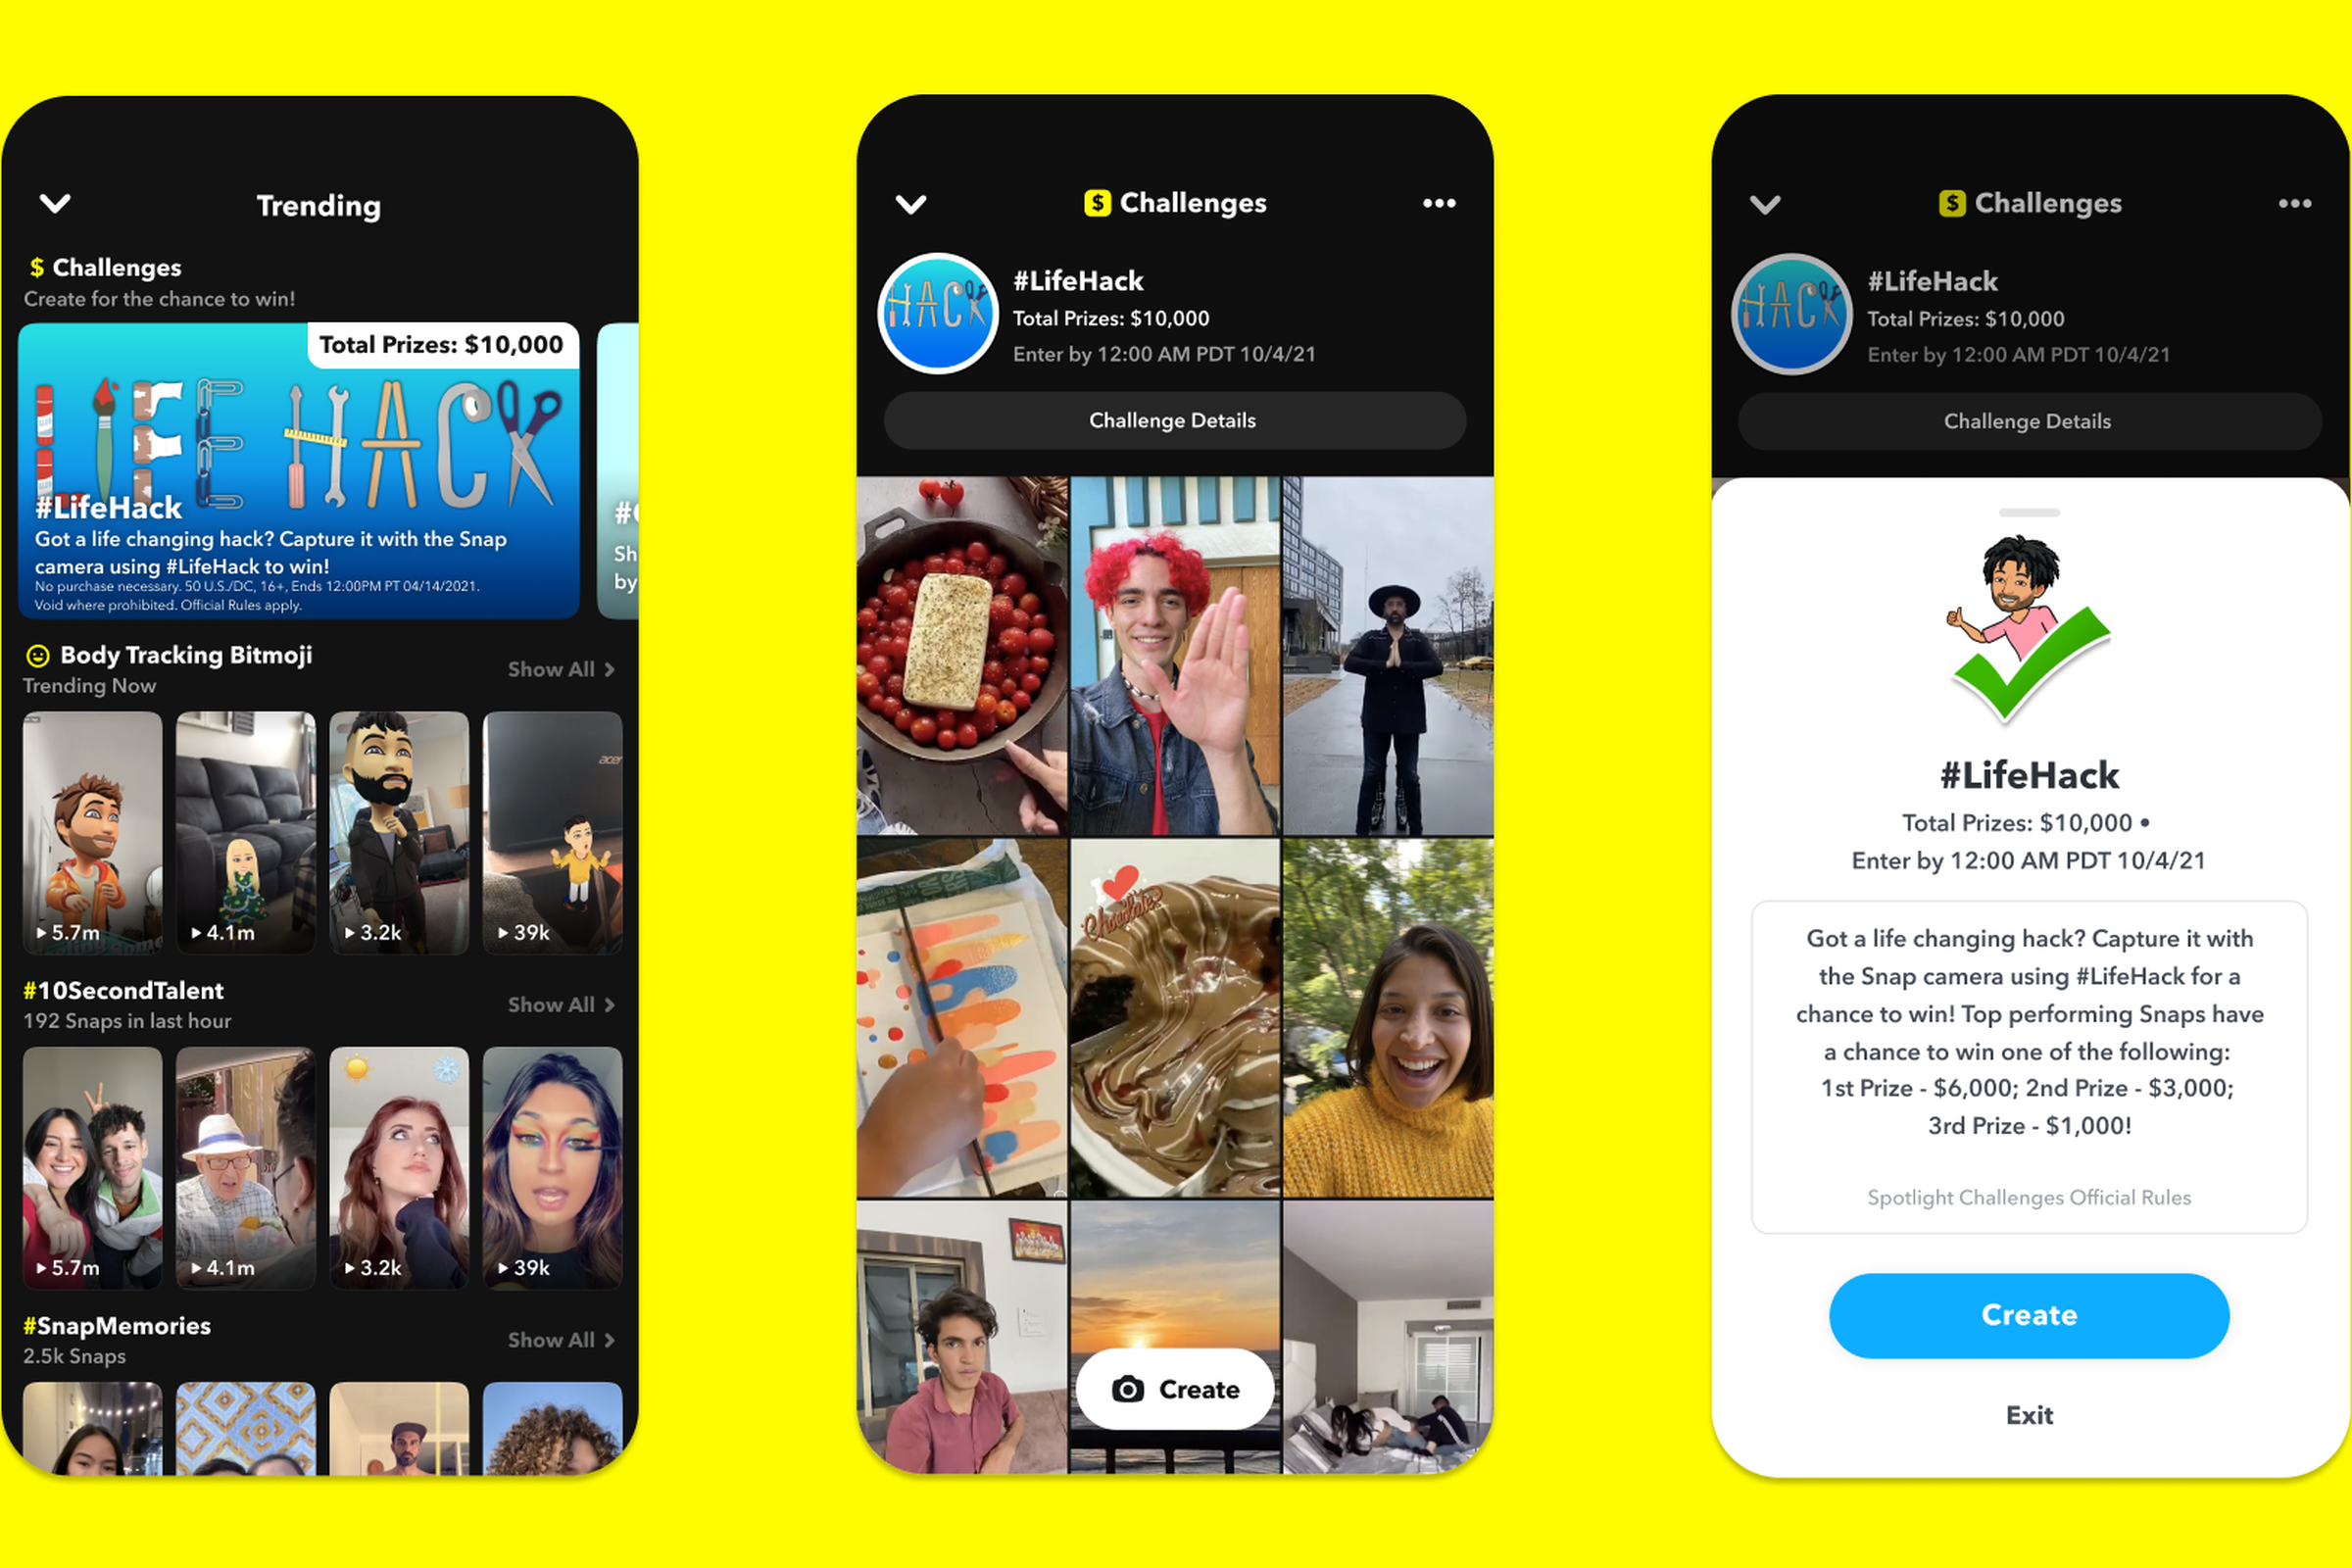 Snapchat’s Spotlight Challenges